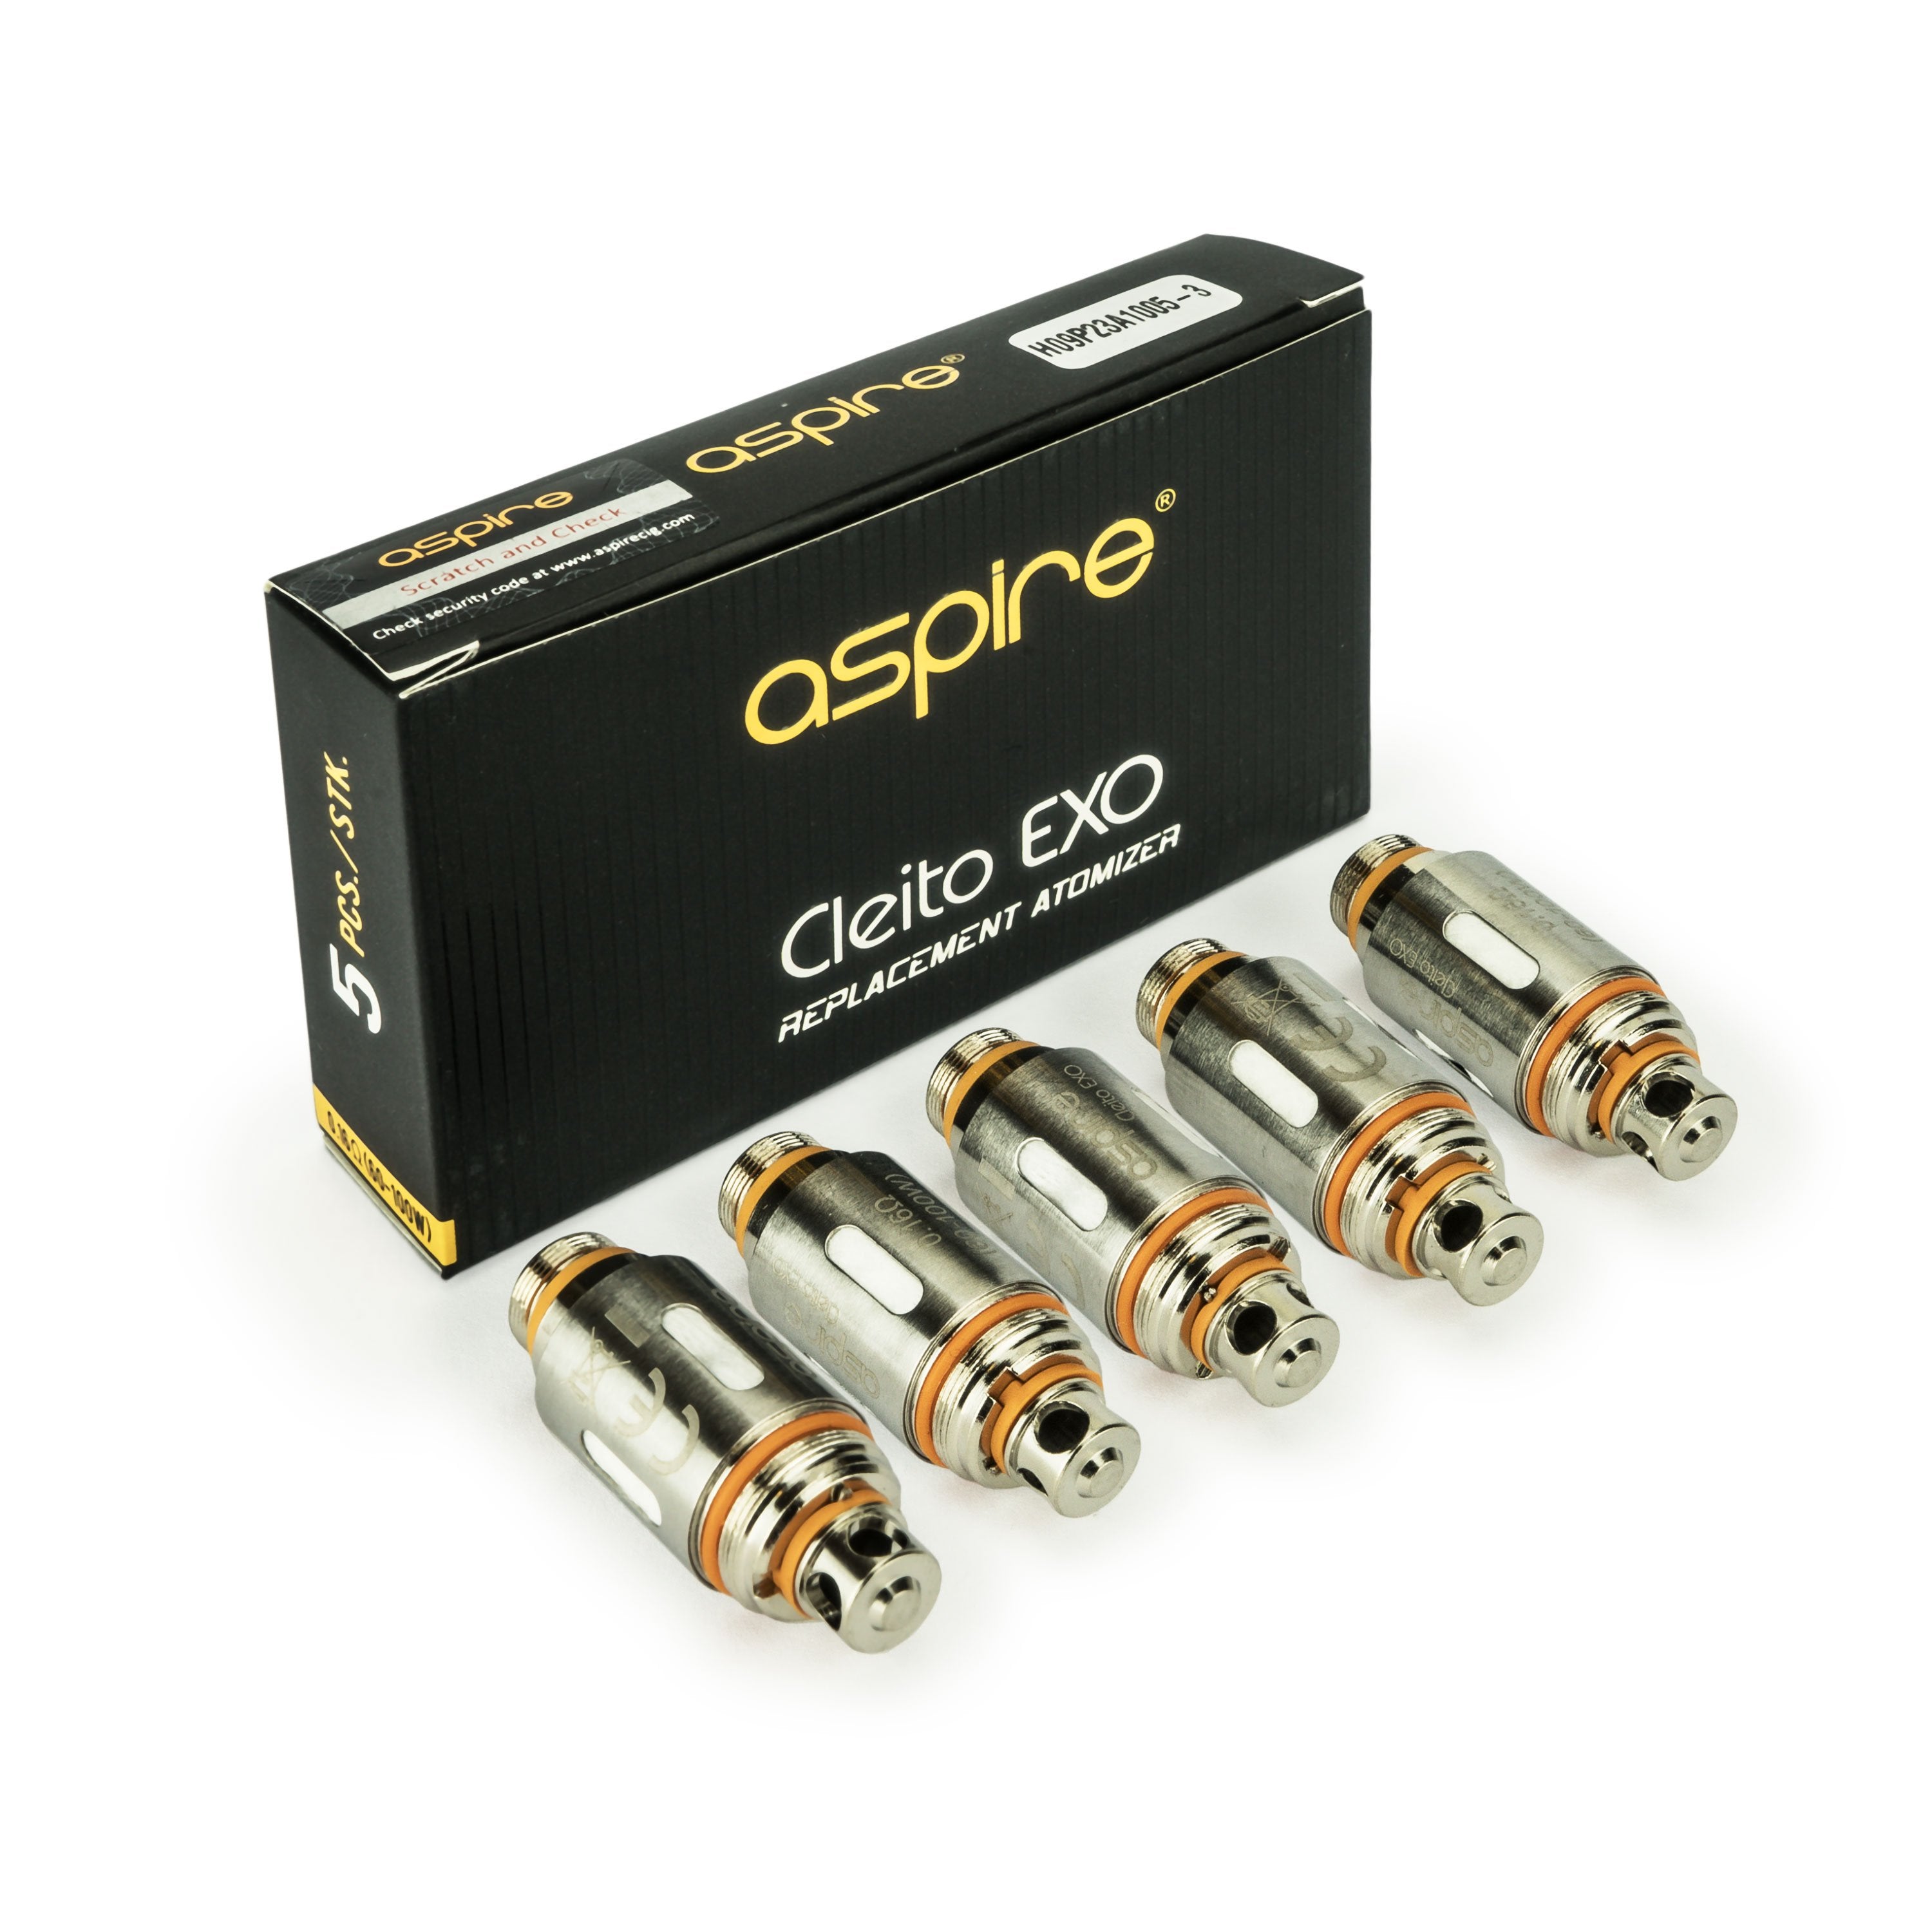 Aspire - Cleito EXO Verdampferköpfe - 0,16 Ohm (5 Stück)